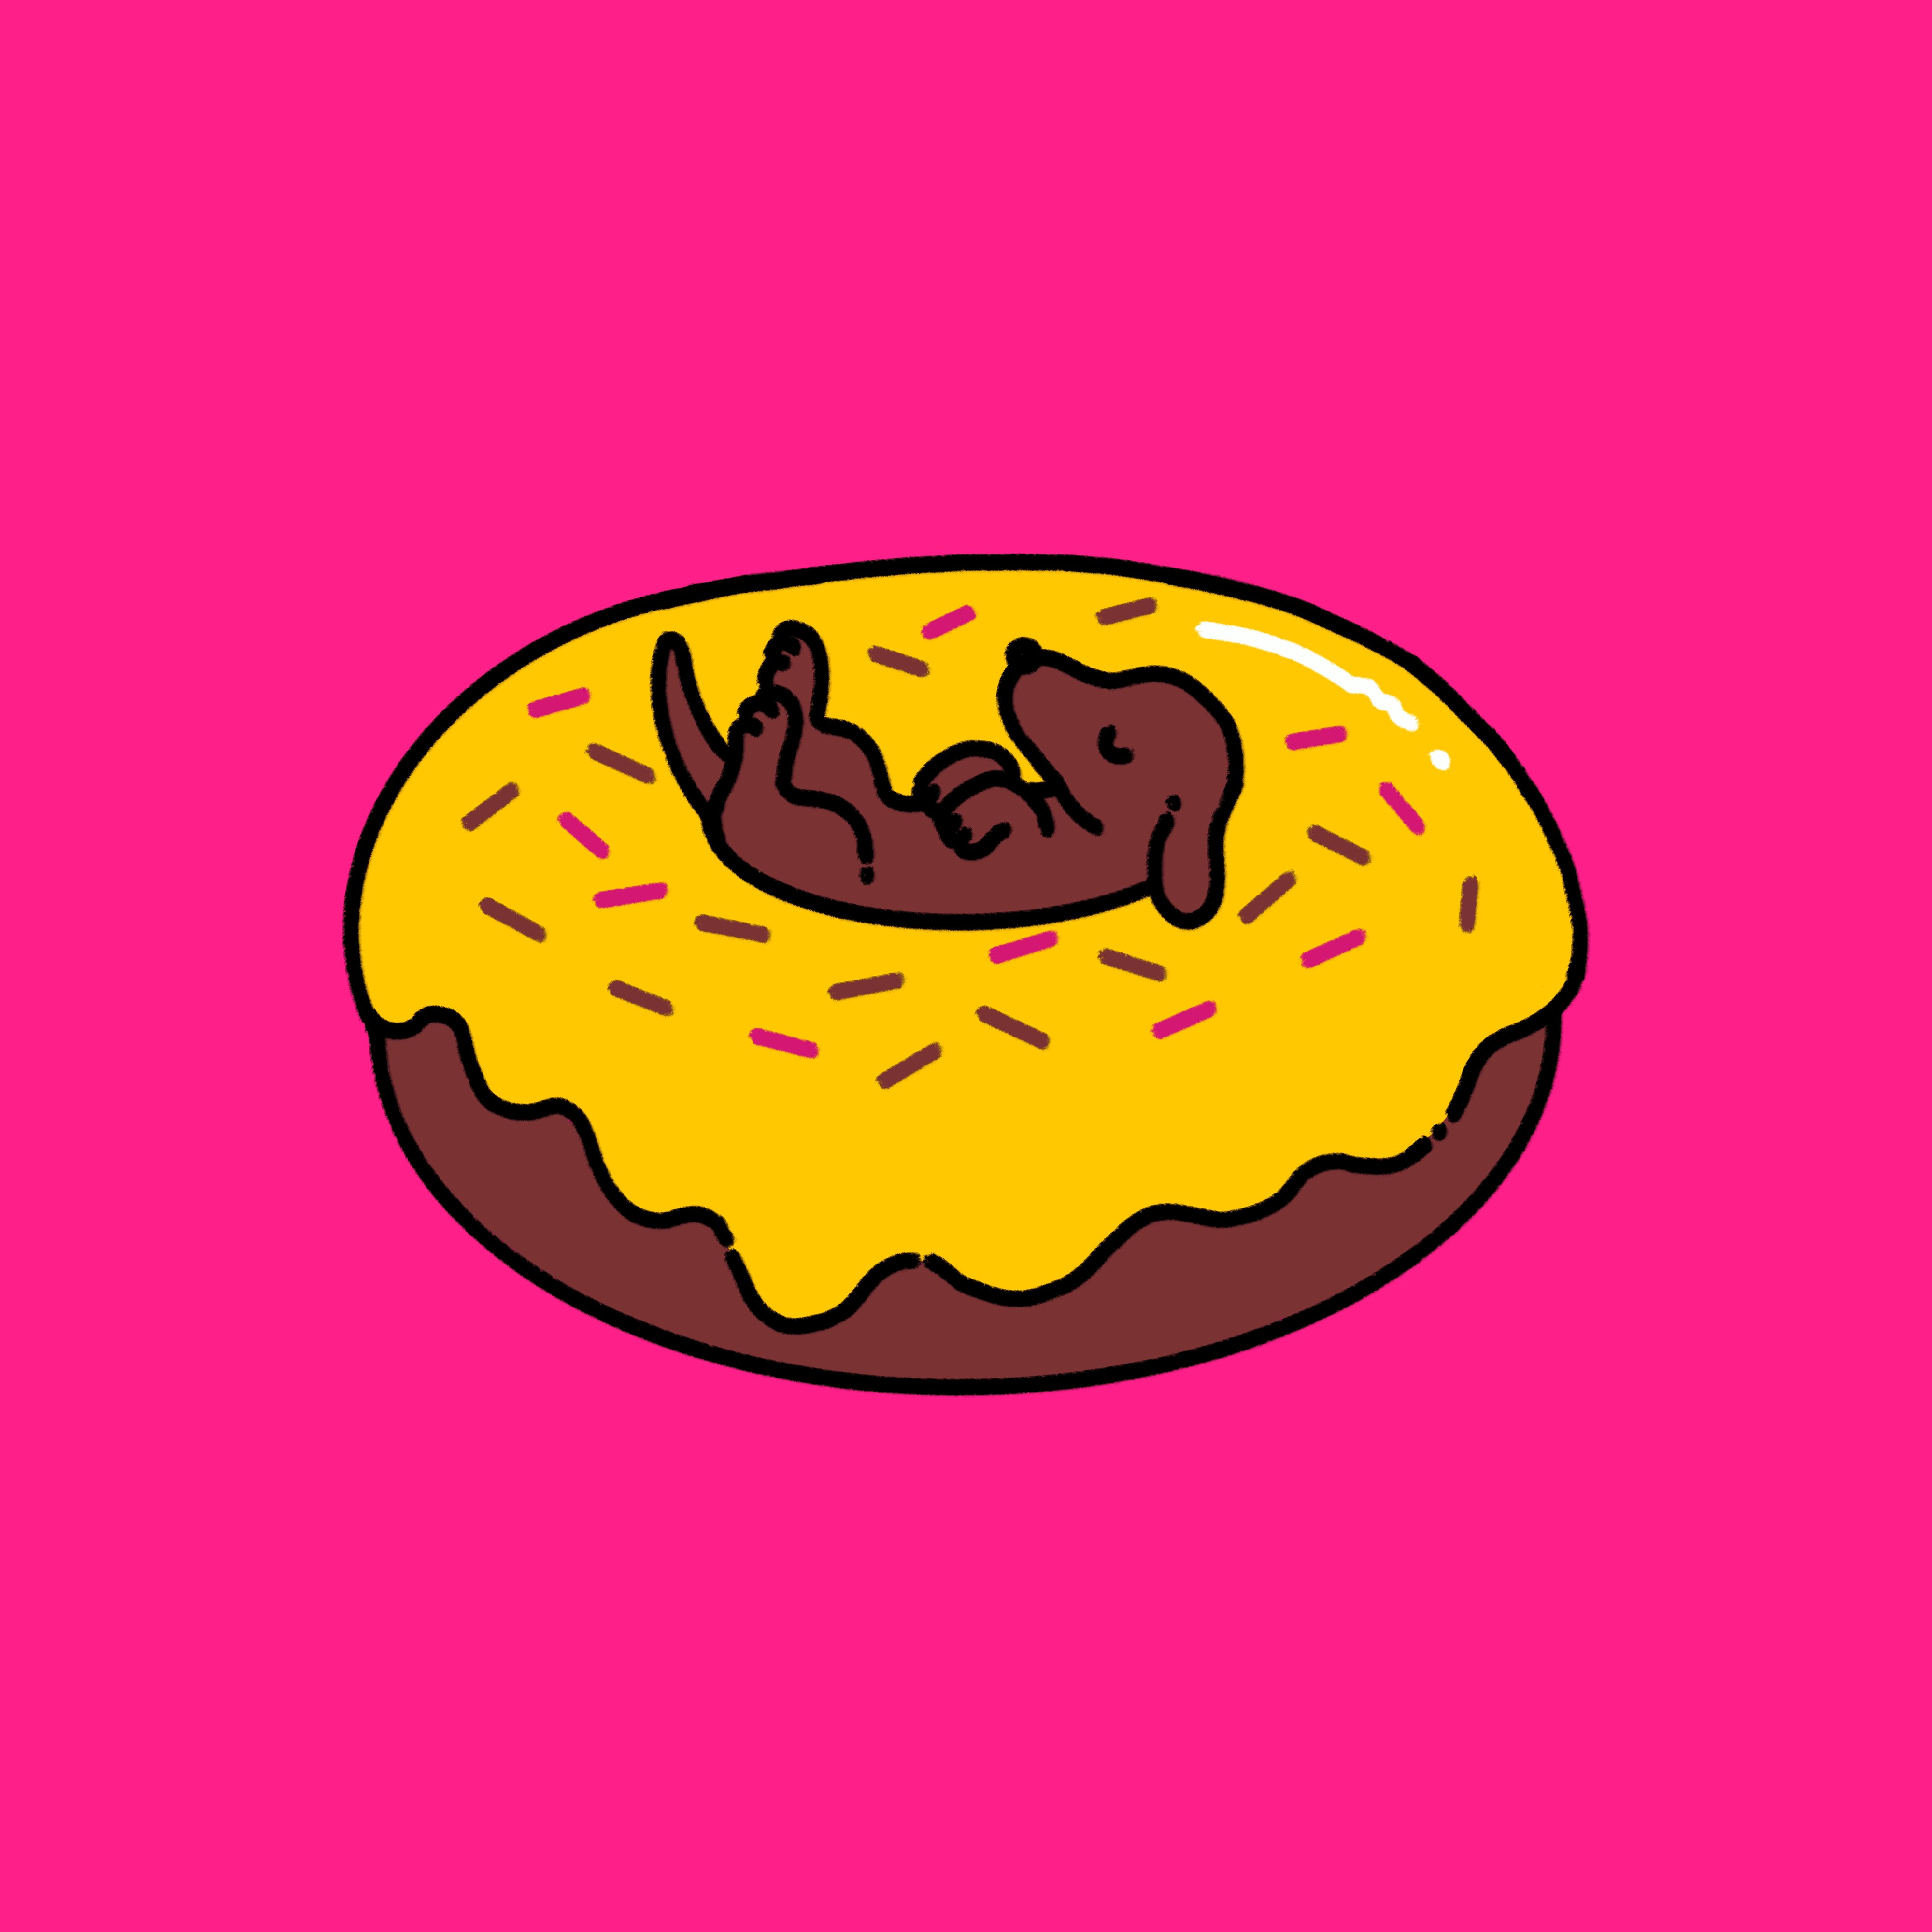 Banana chocolate donuts dog